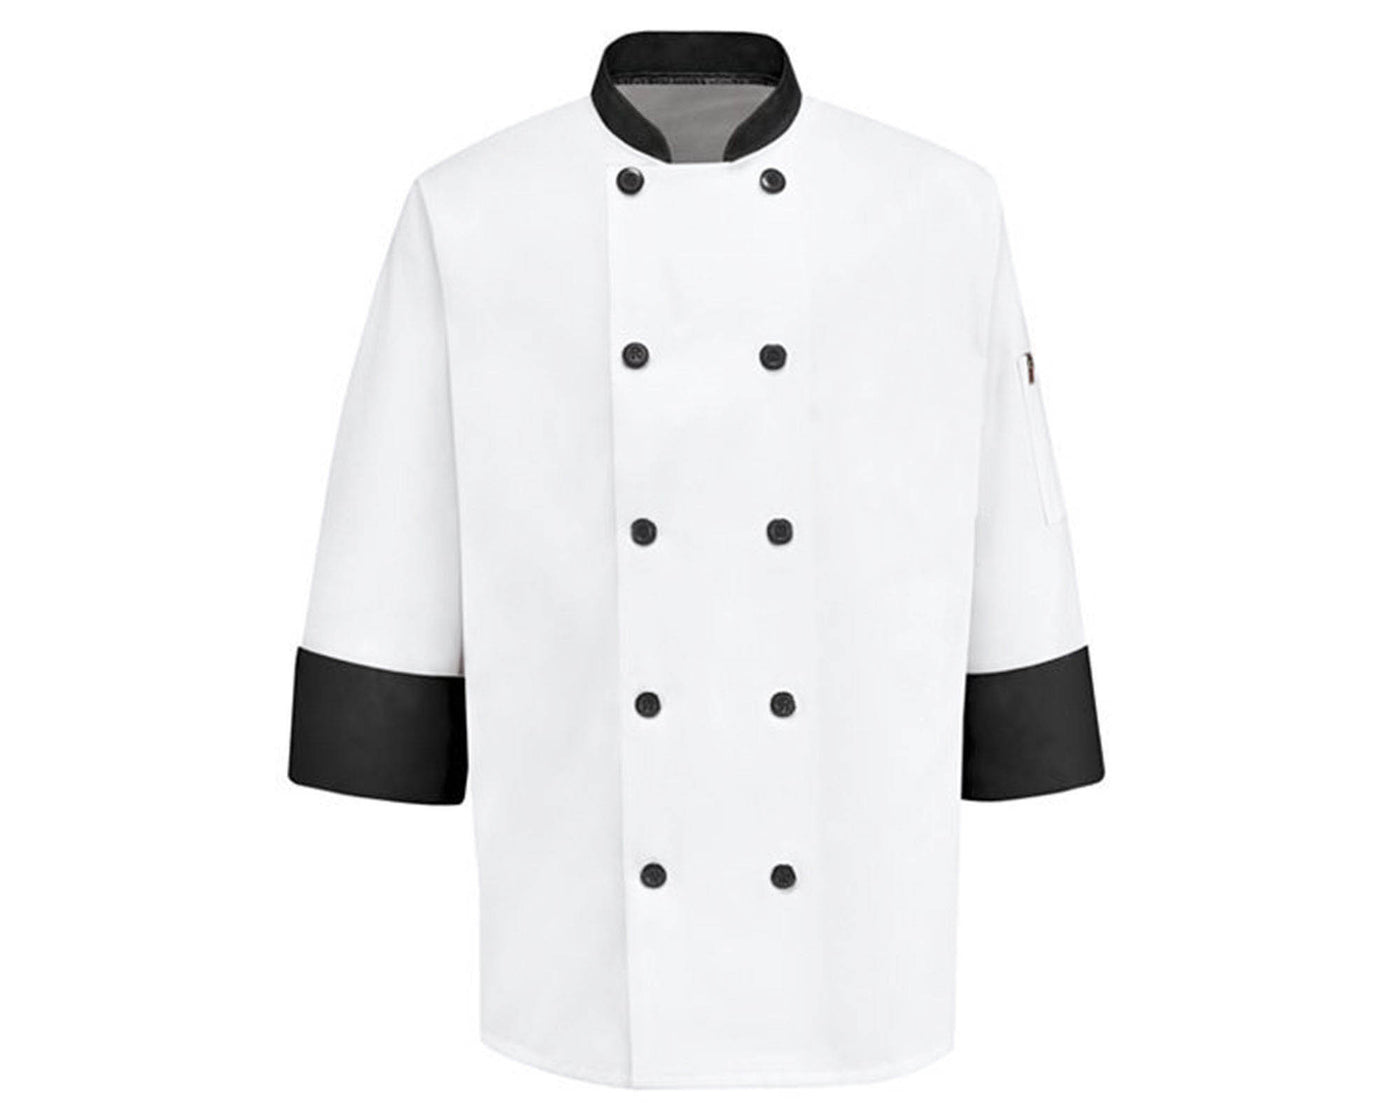 White chef coat with black trim and mesh underarm